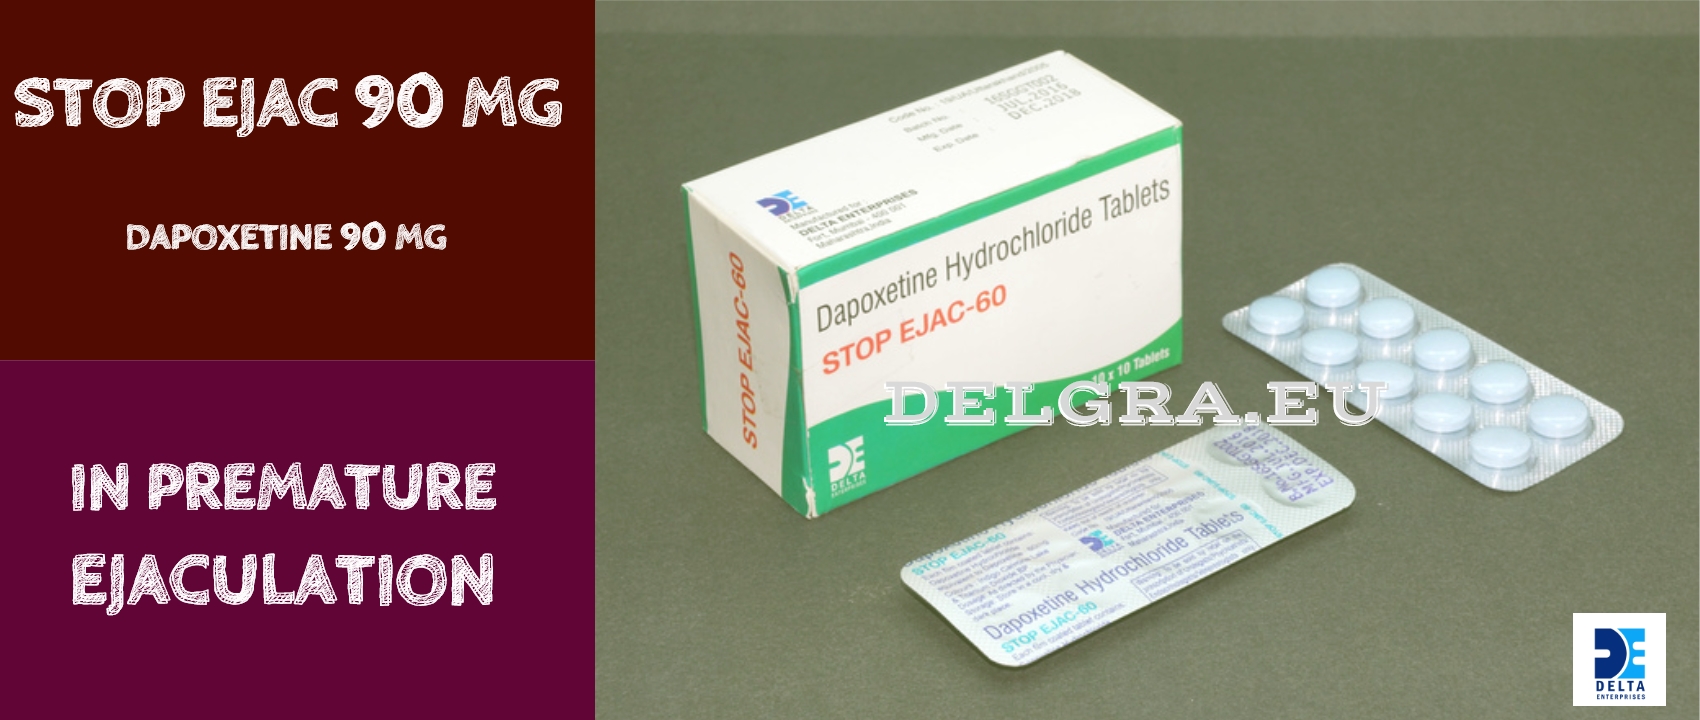 Stop Ejac®90 mg-Dapoxetine 90 mg